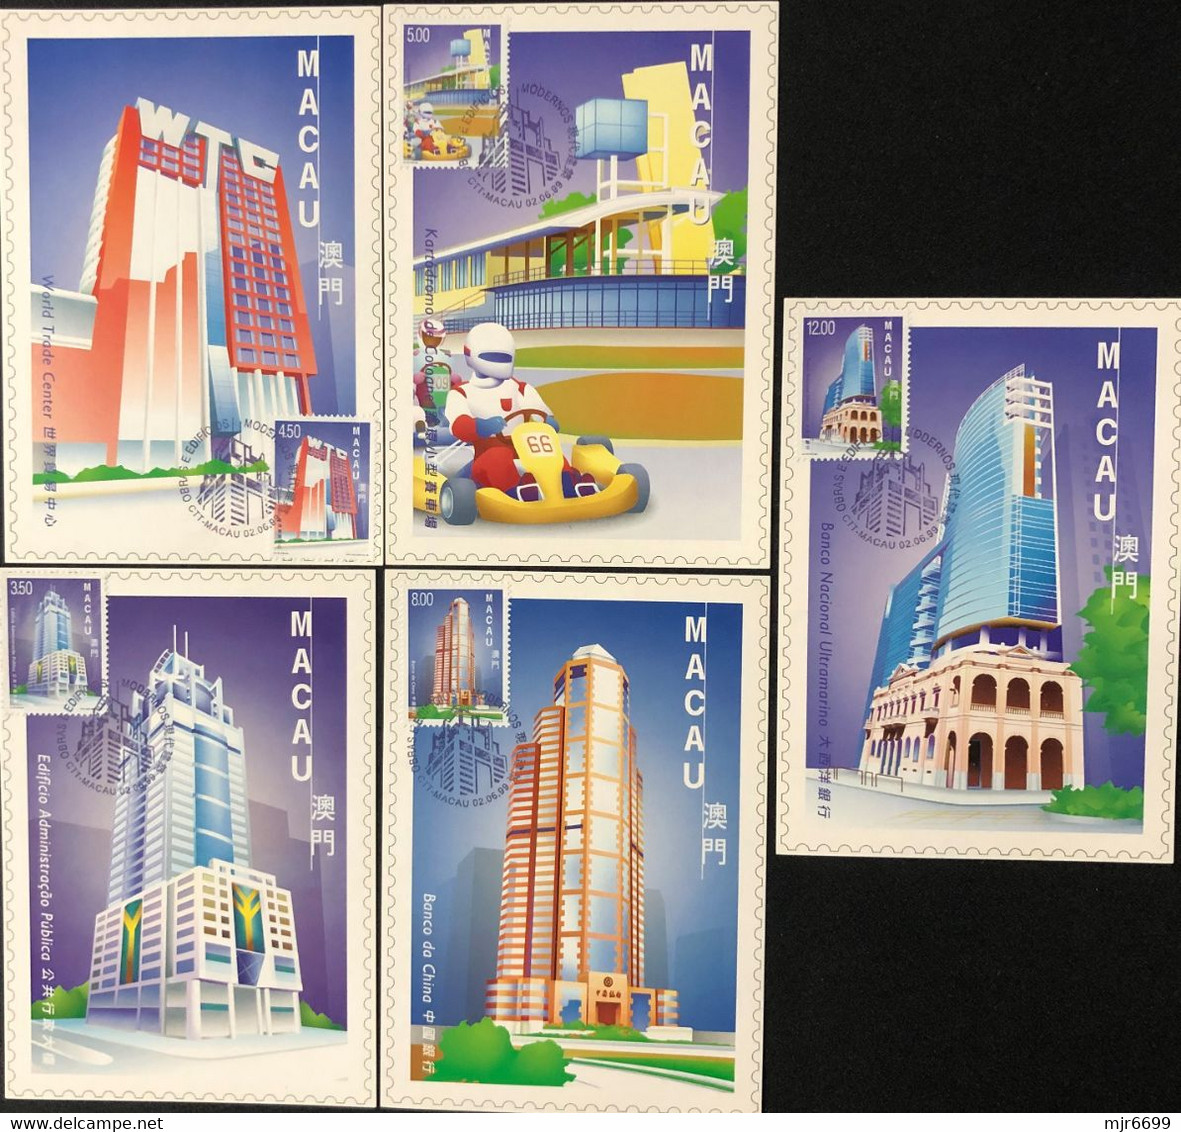 MACAU - 1996 MODERN BUILDINGS SET MAX CARDS OF 10 - Maximum Cards